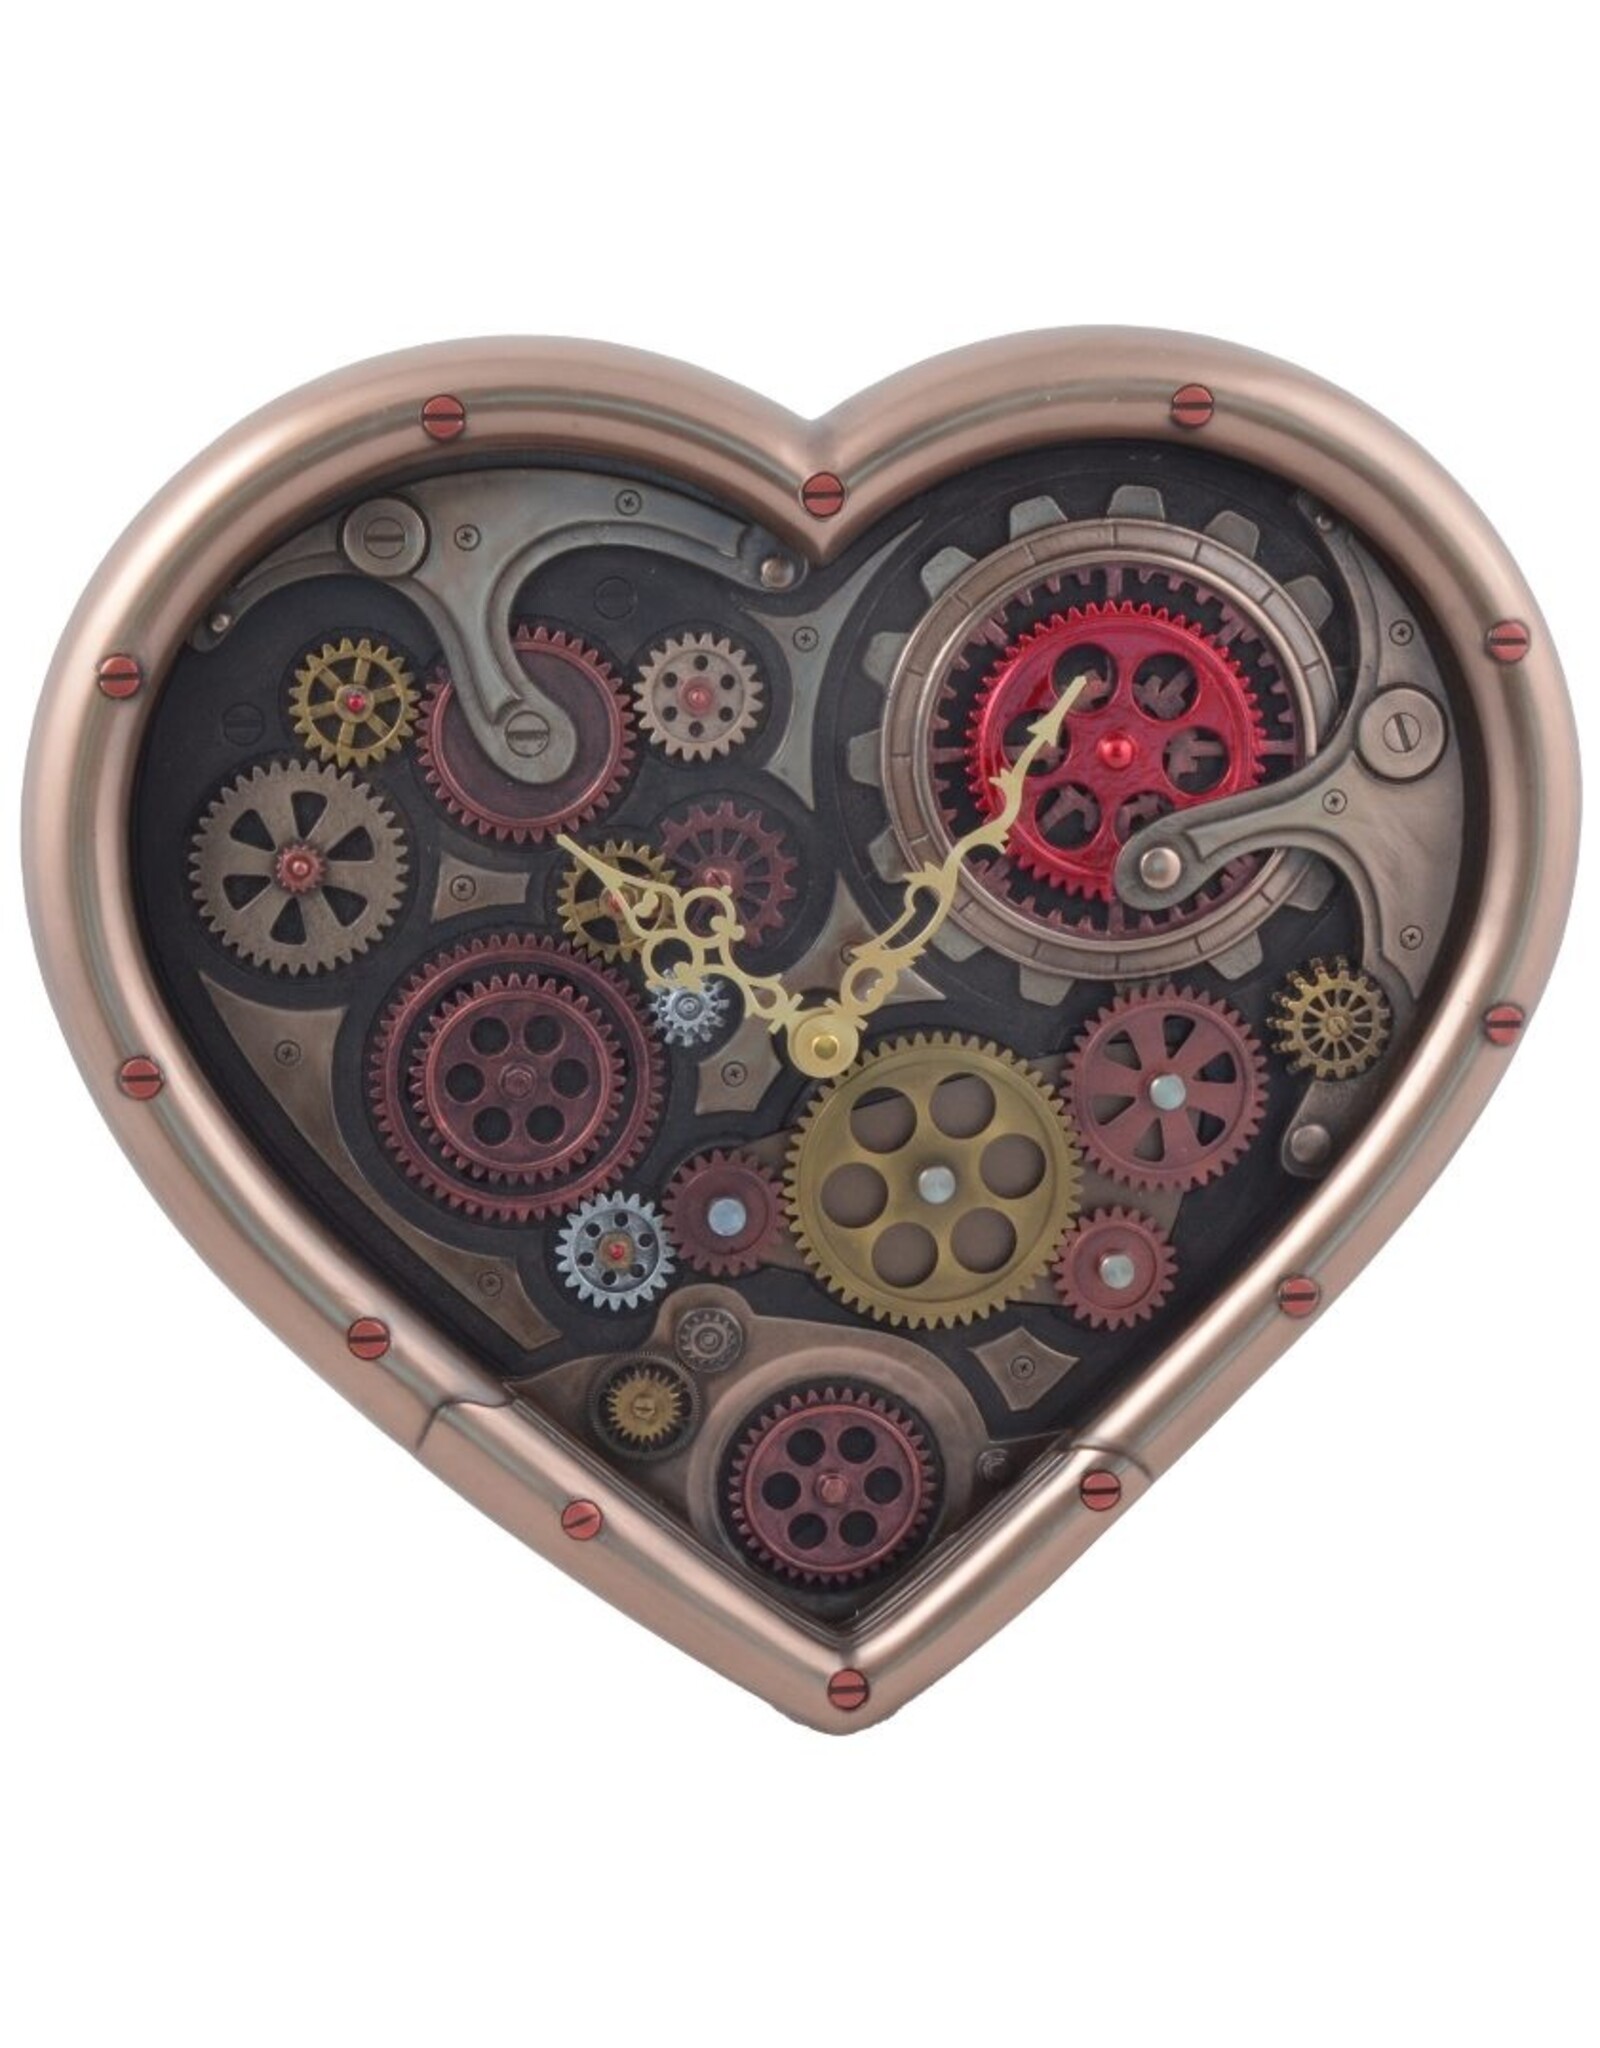 Veronese Design Giftware & Lifestyle -  Steampunk Hart Wandklok Time of Love